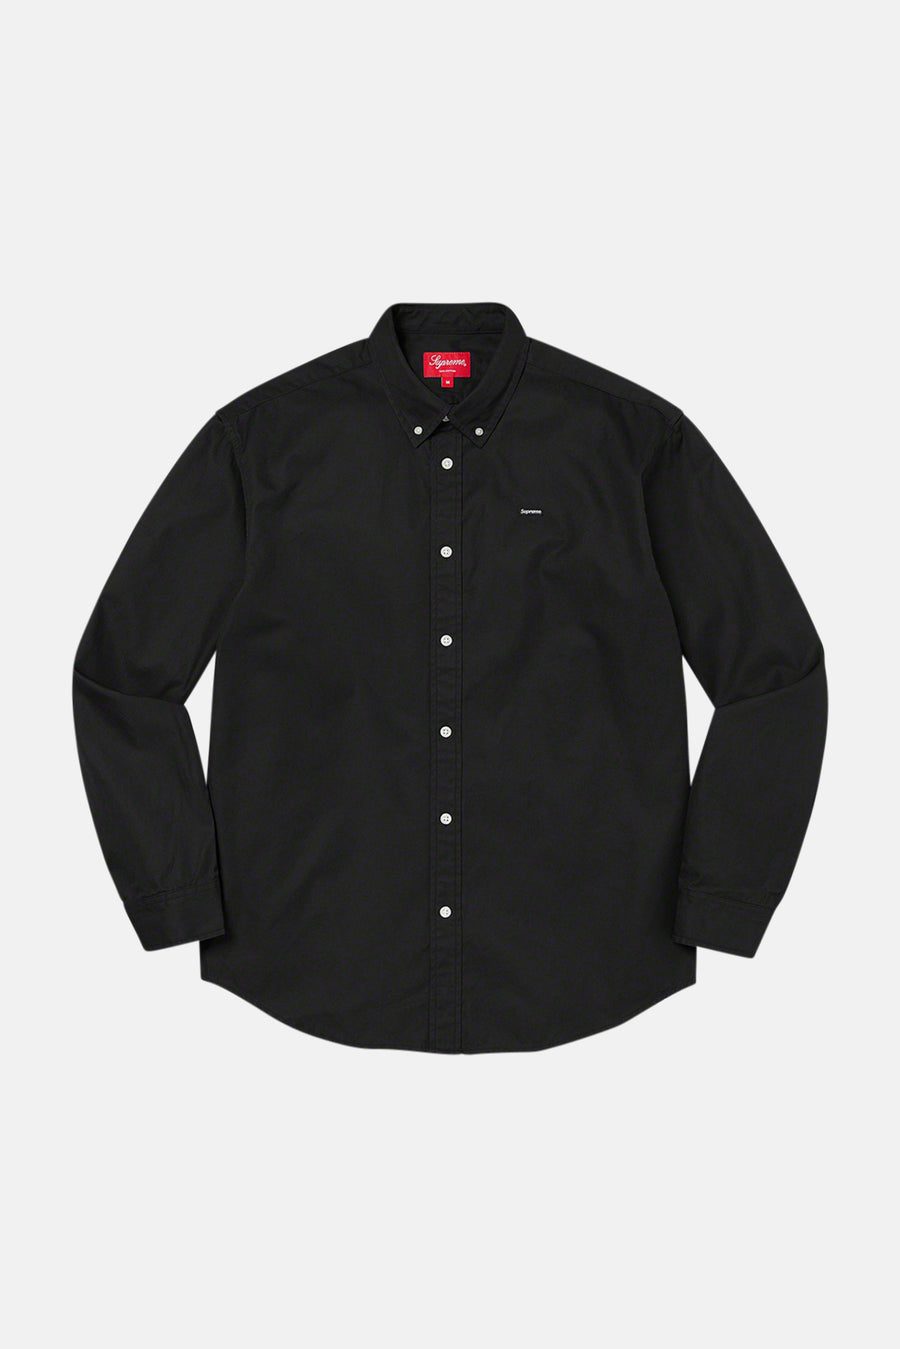 Supreme Small Box Shirt Black